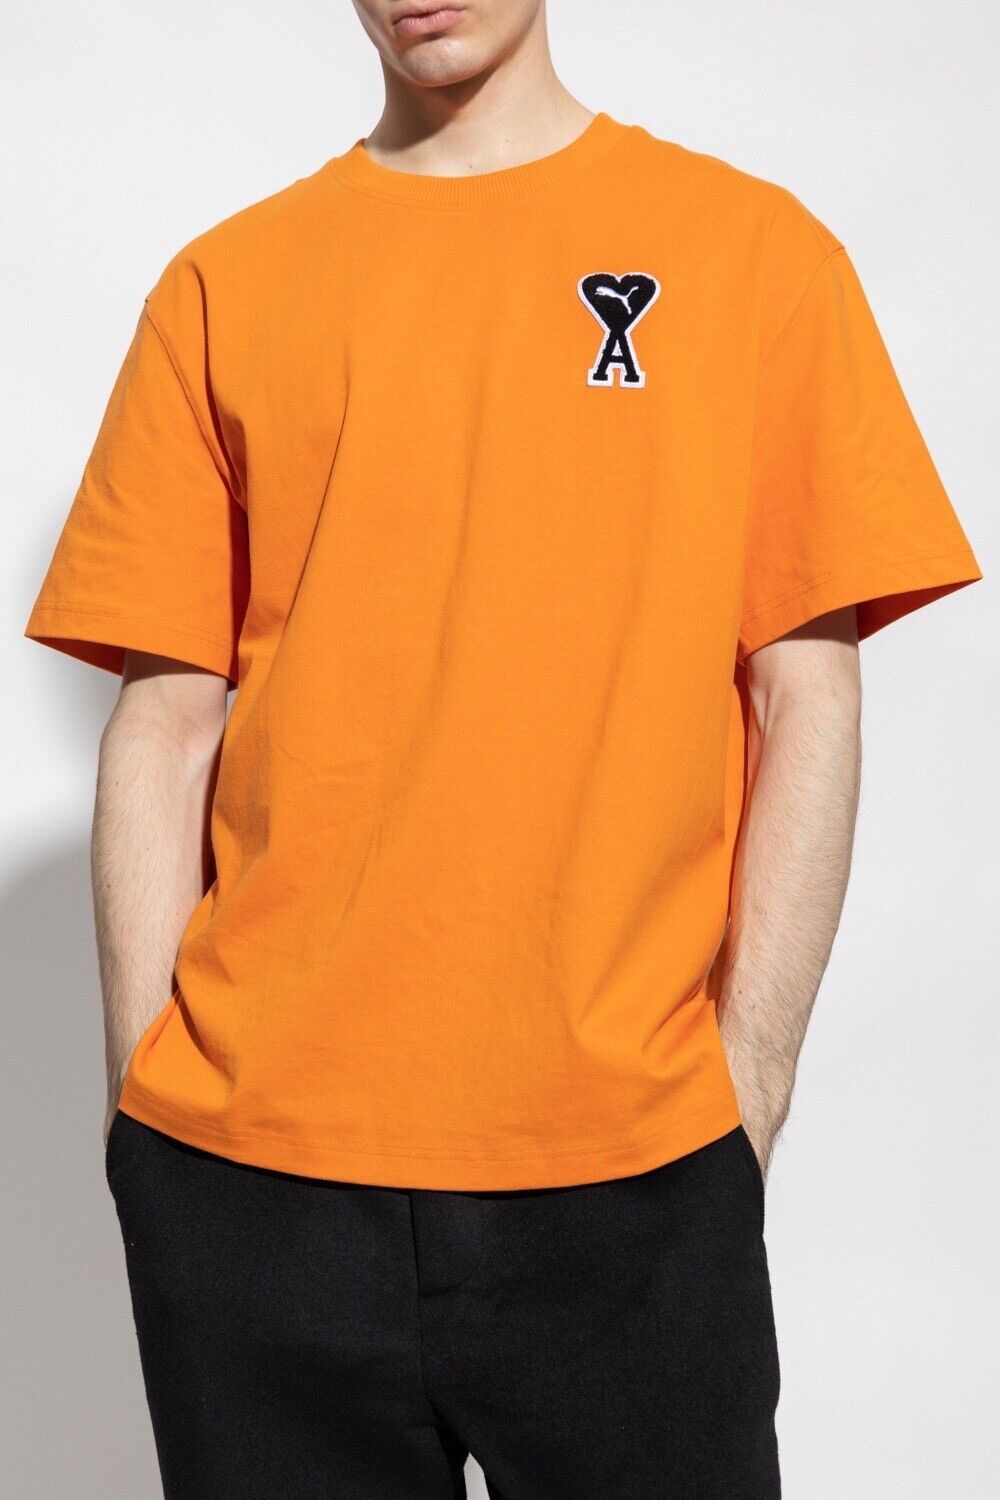 Puma x AMI T shirt Orange RRP £95